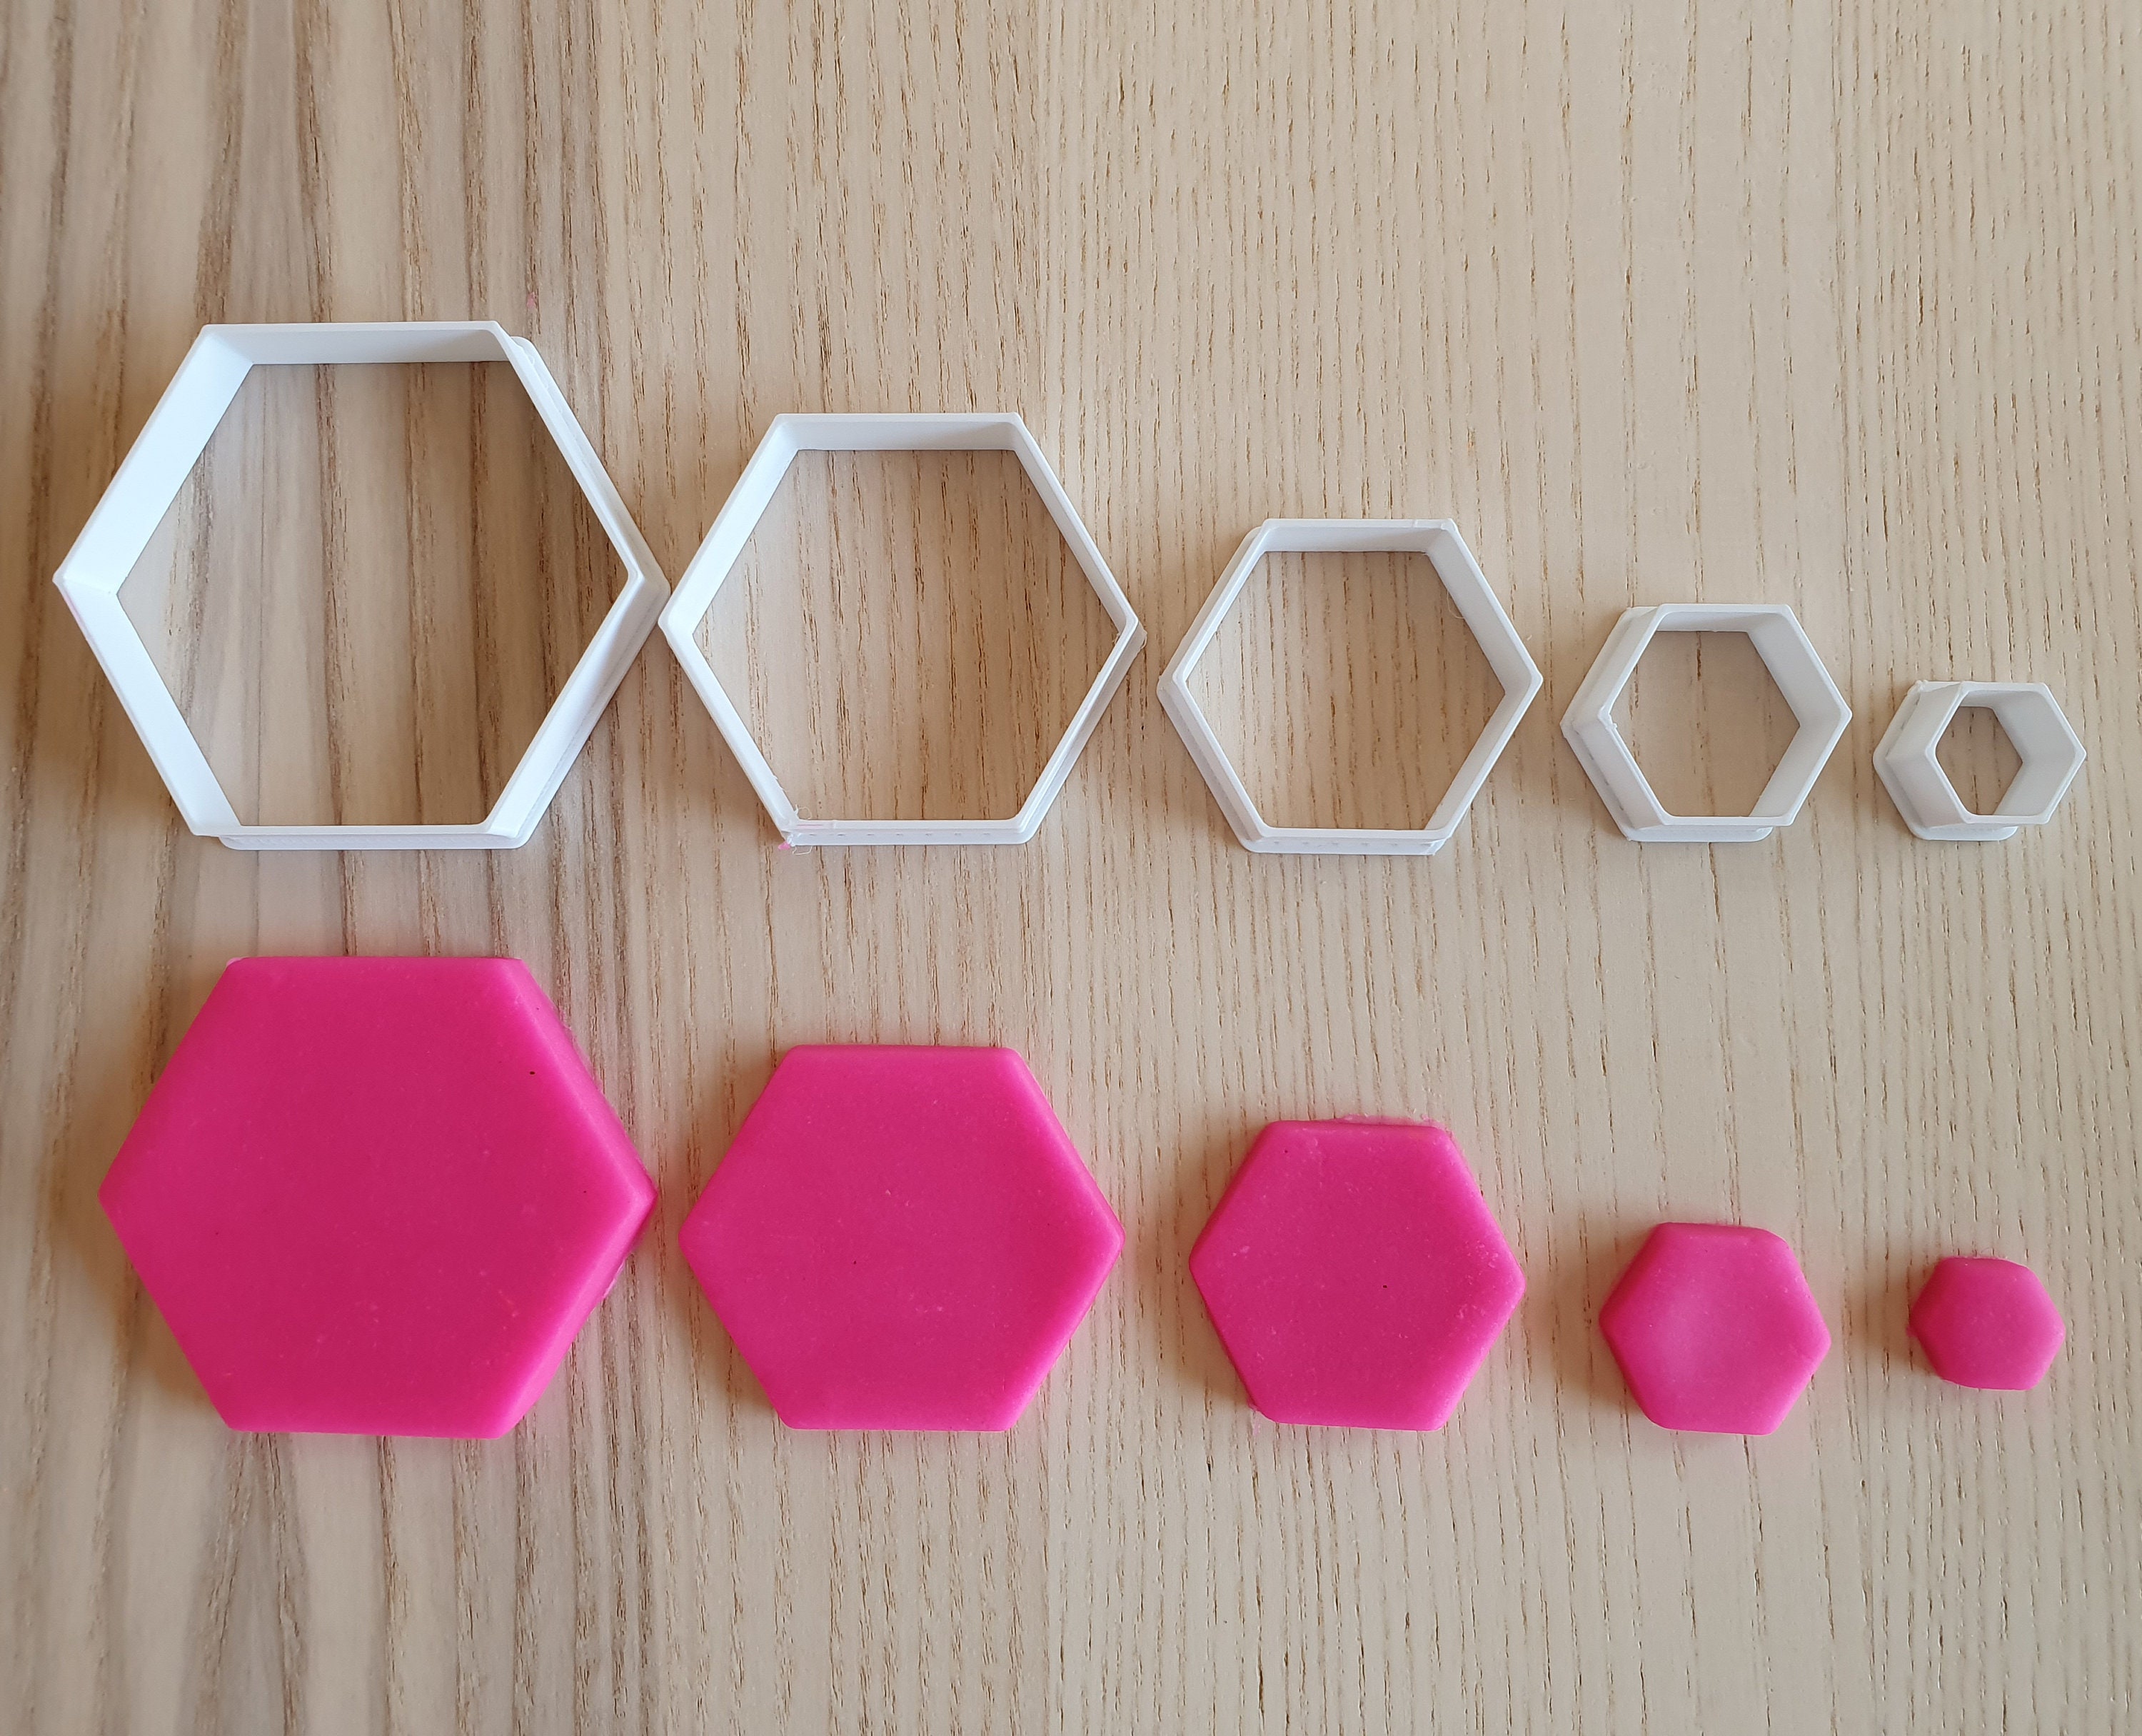 Beeswax Bulk Hexagon Blocks 